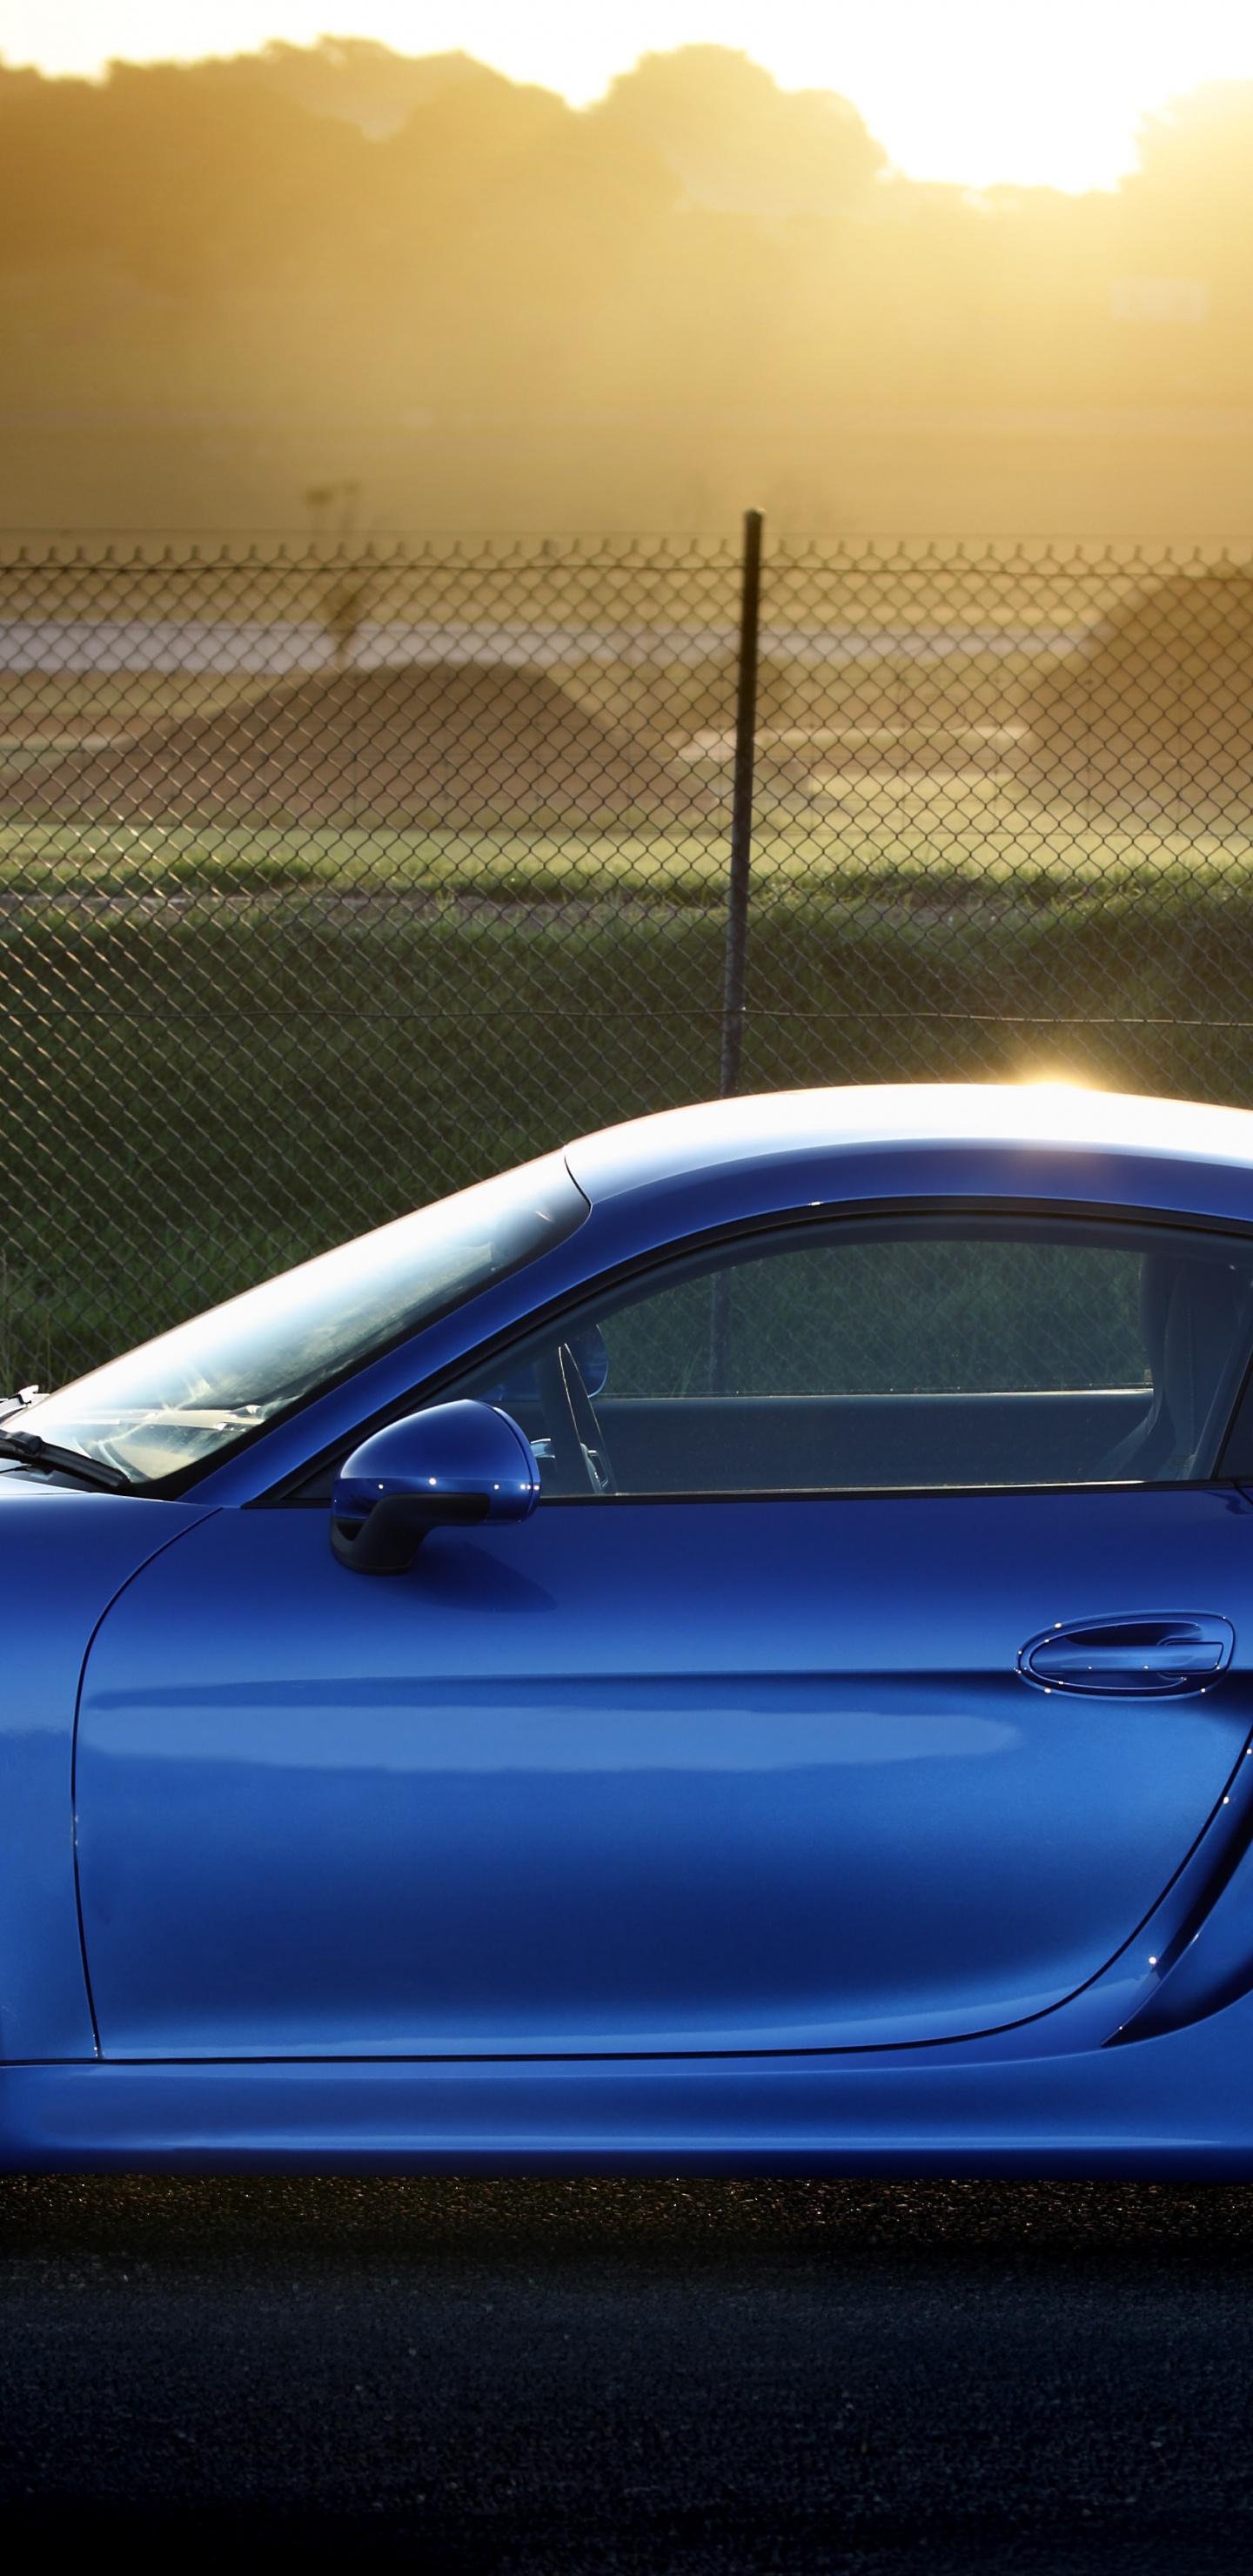 Blue Porsche 911 Parked Near Gray Metal Fence During Daytime. Wallpaper in 1440x2960 Resolution